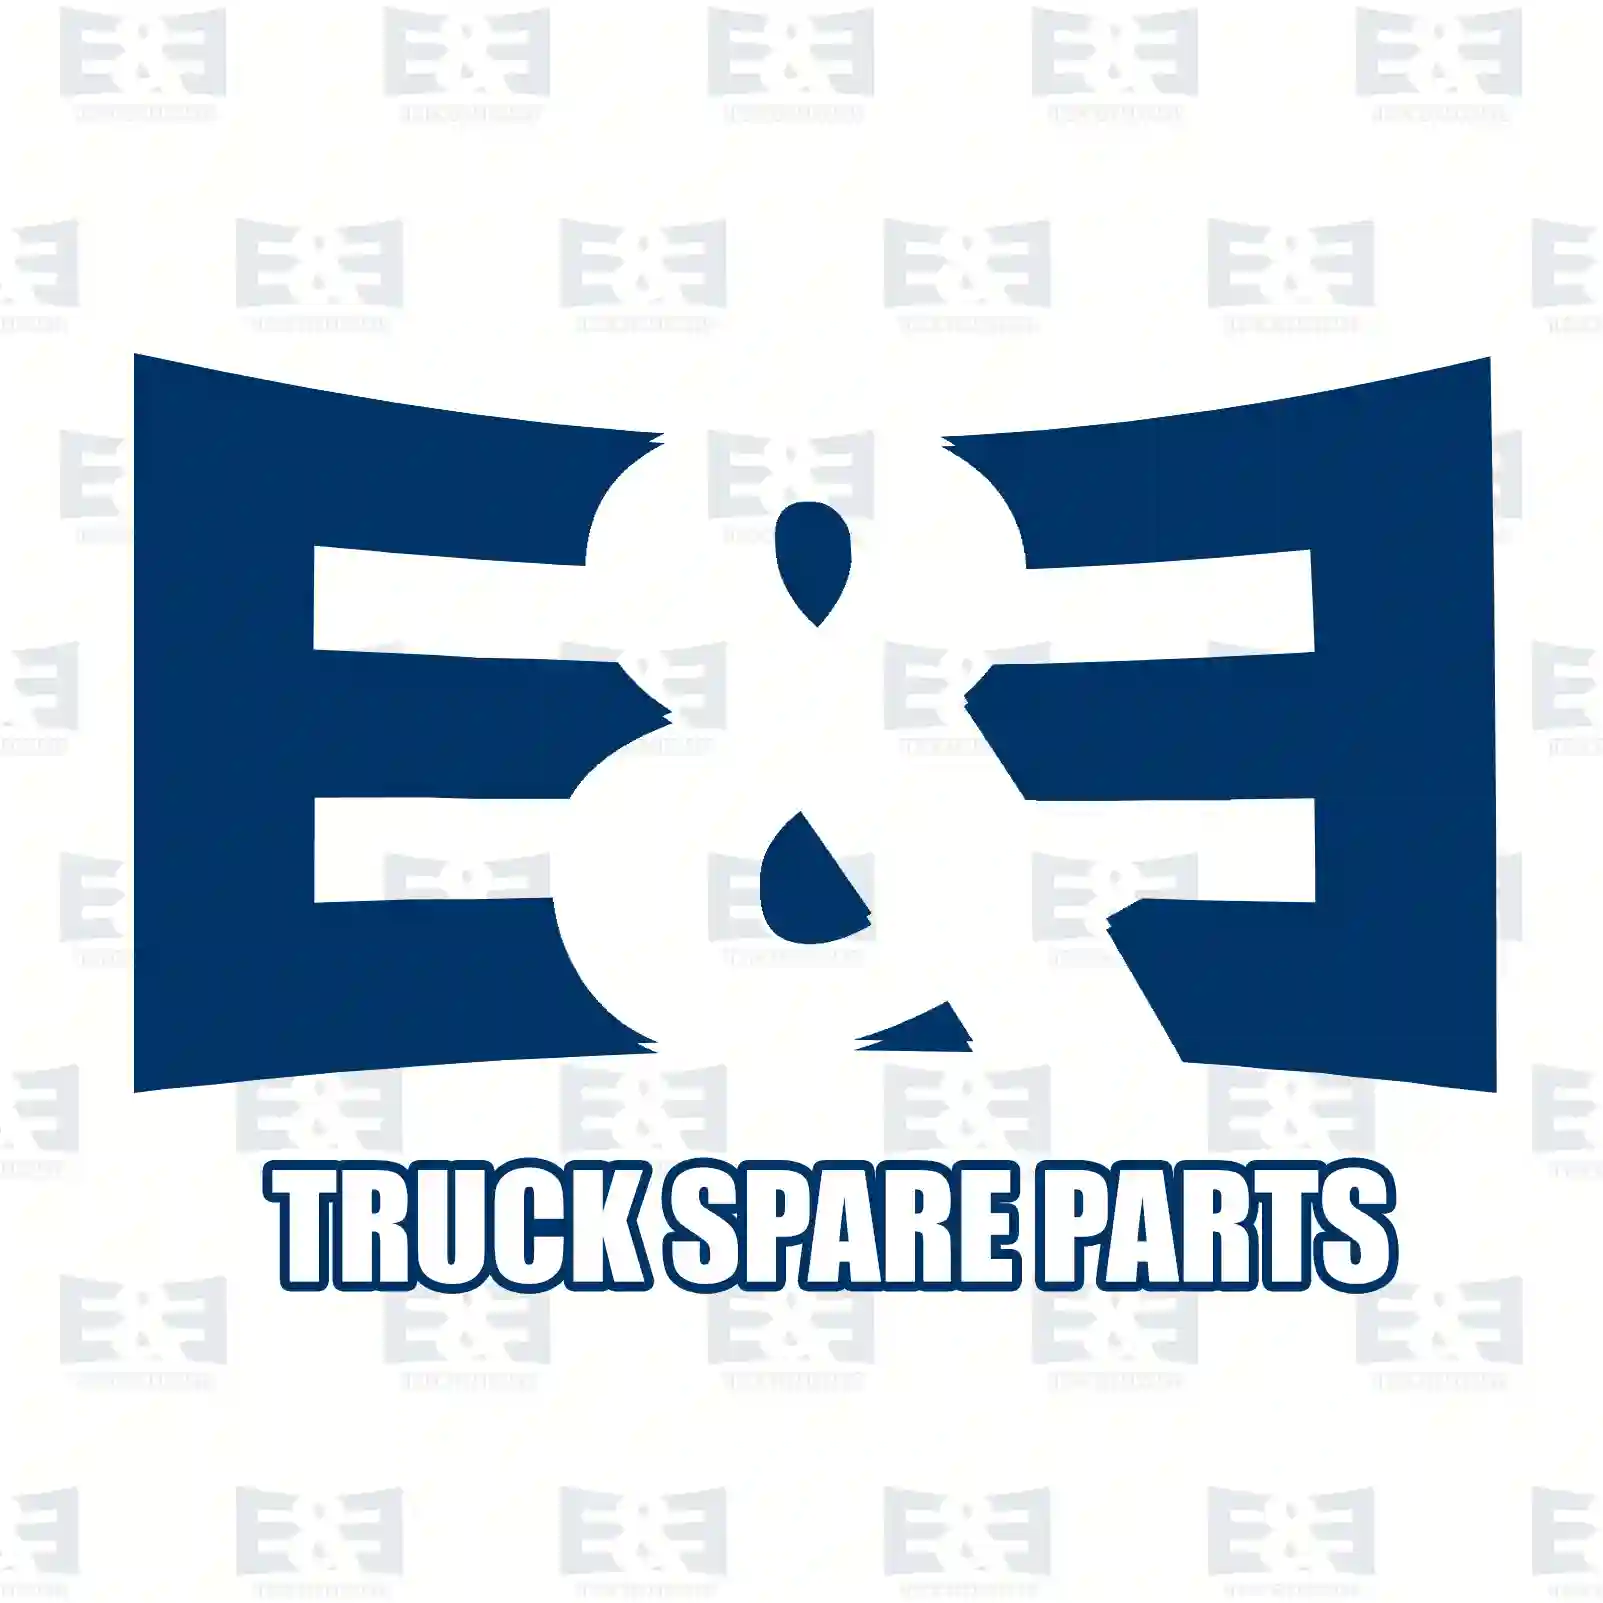 Disc brake pad kit, 2E2294557, 09940082, 1503107, 09940082, 01902301, 01902493, 01903488, 01906039, 01906155, 01906159, 01906206, 09940082, 1906039, 1906159, 01906159, 7701201622 ||  2E2294557 E&E Truck Spare Parts | Truck Spare Parts, Auotomotive Spare Parts Disc brake pad kit, 2E2294557, 09940082, 1503107, 09940082, 01902301, 01902493, 01903488, 01906039, 01906155, 01906159, 01906206, 09940082, 1906039, 1906159, 01906159, 7701201622 ||  2E2294557 E&E Truck Spare Parts | Truck Spare Parts, Auotomotive Spare Parts